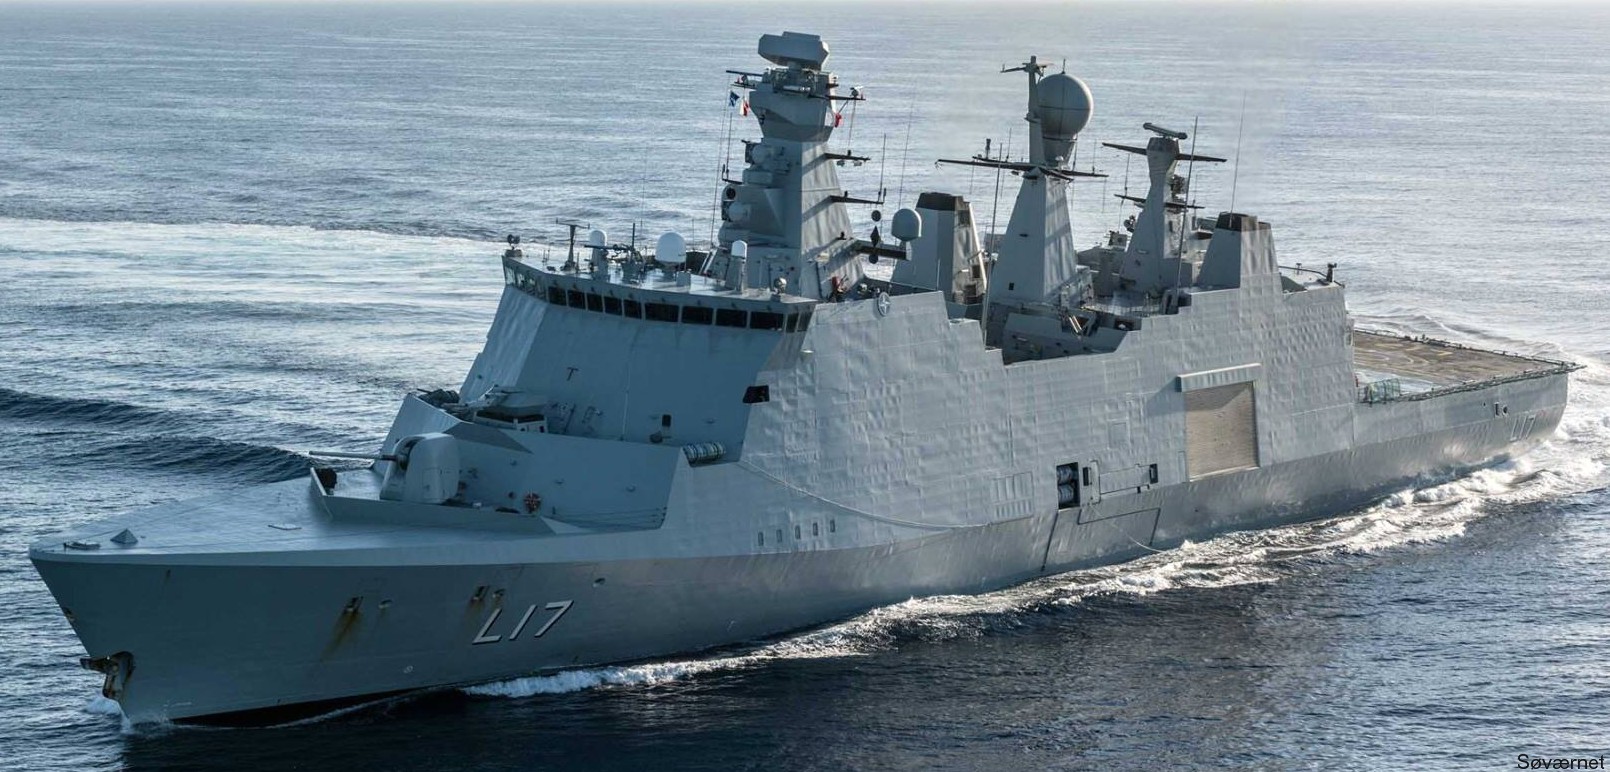 f-342 hdms esbern snare l-17 frigate command support ship royal danish navy 101